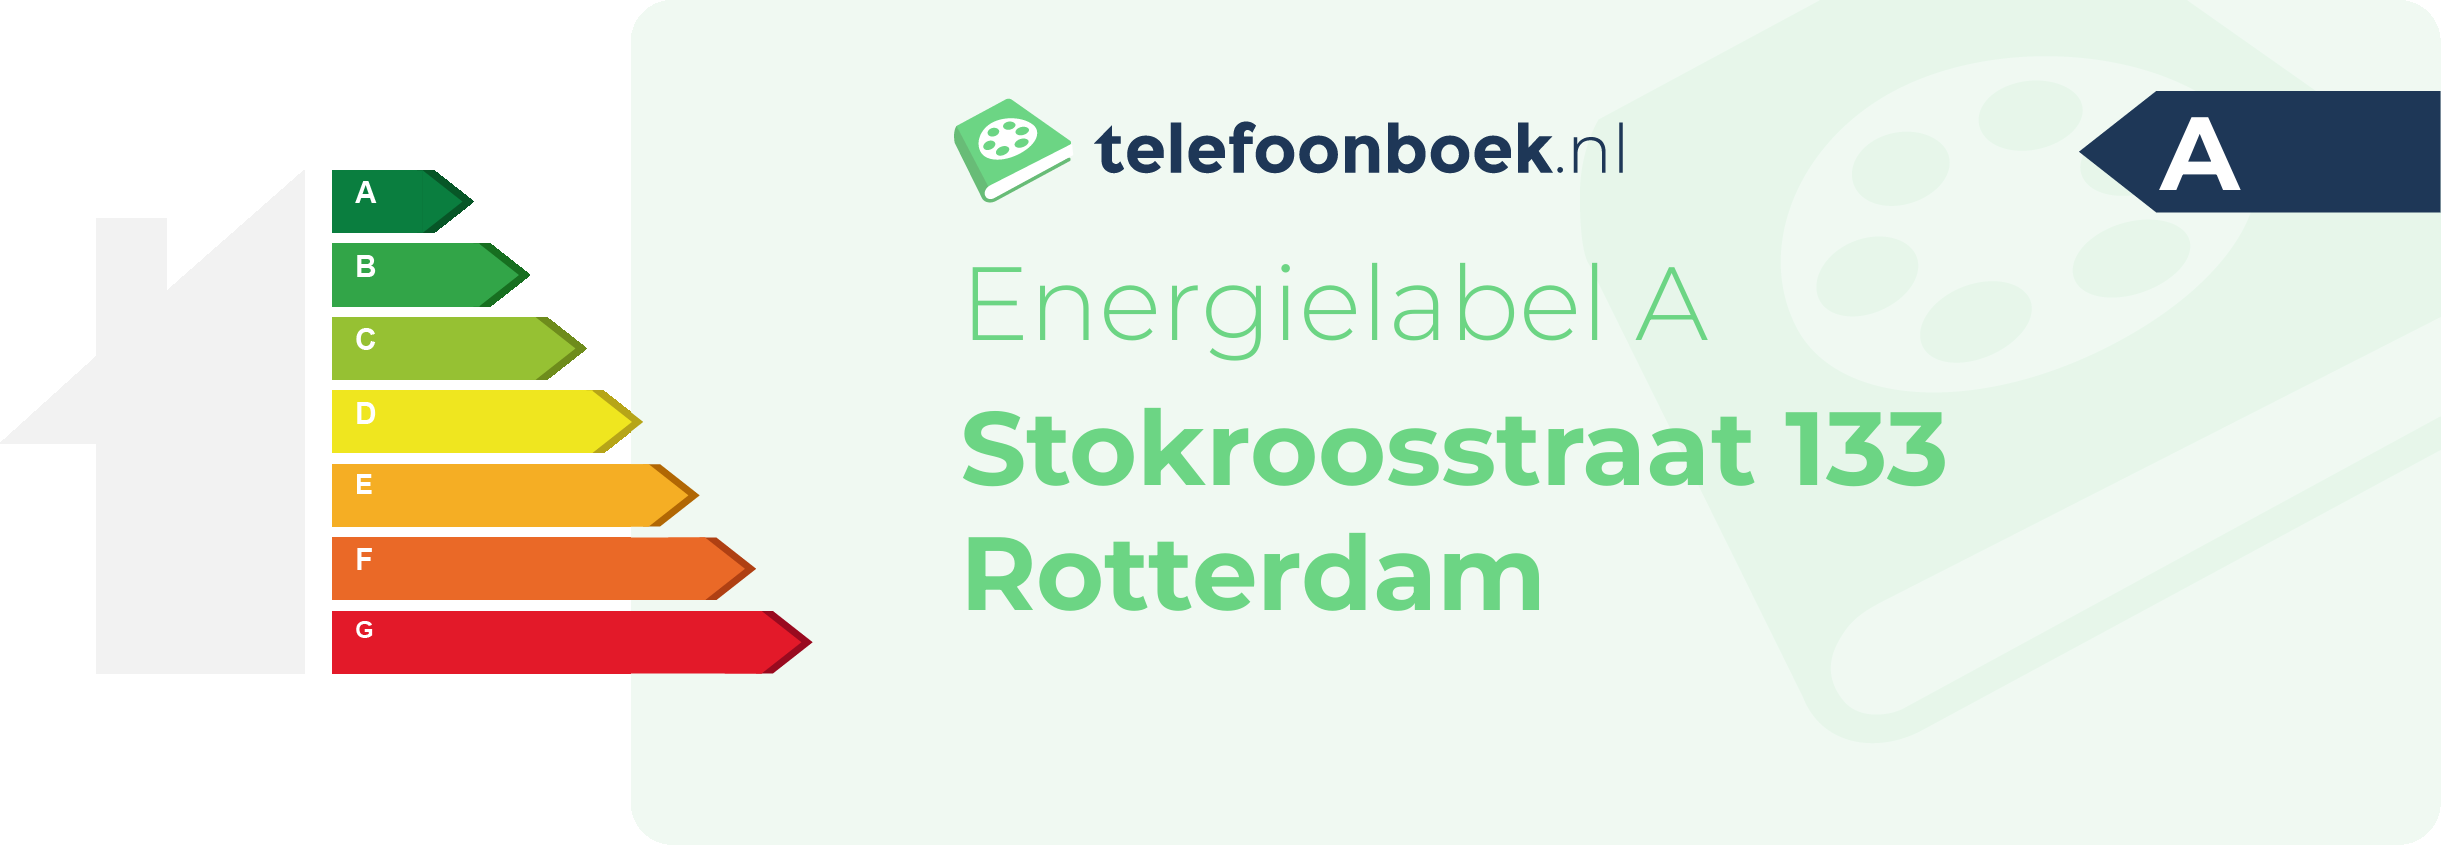 Energielabel Stokroosstraat 133 Rotterdam